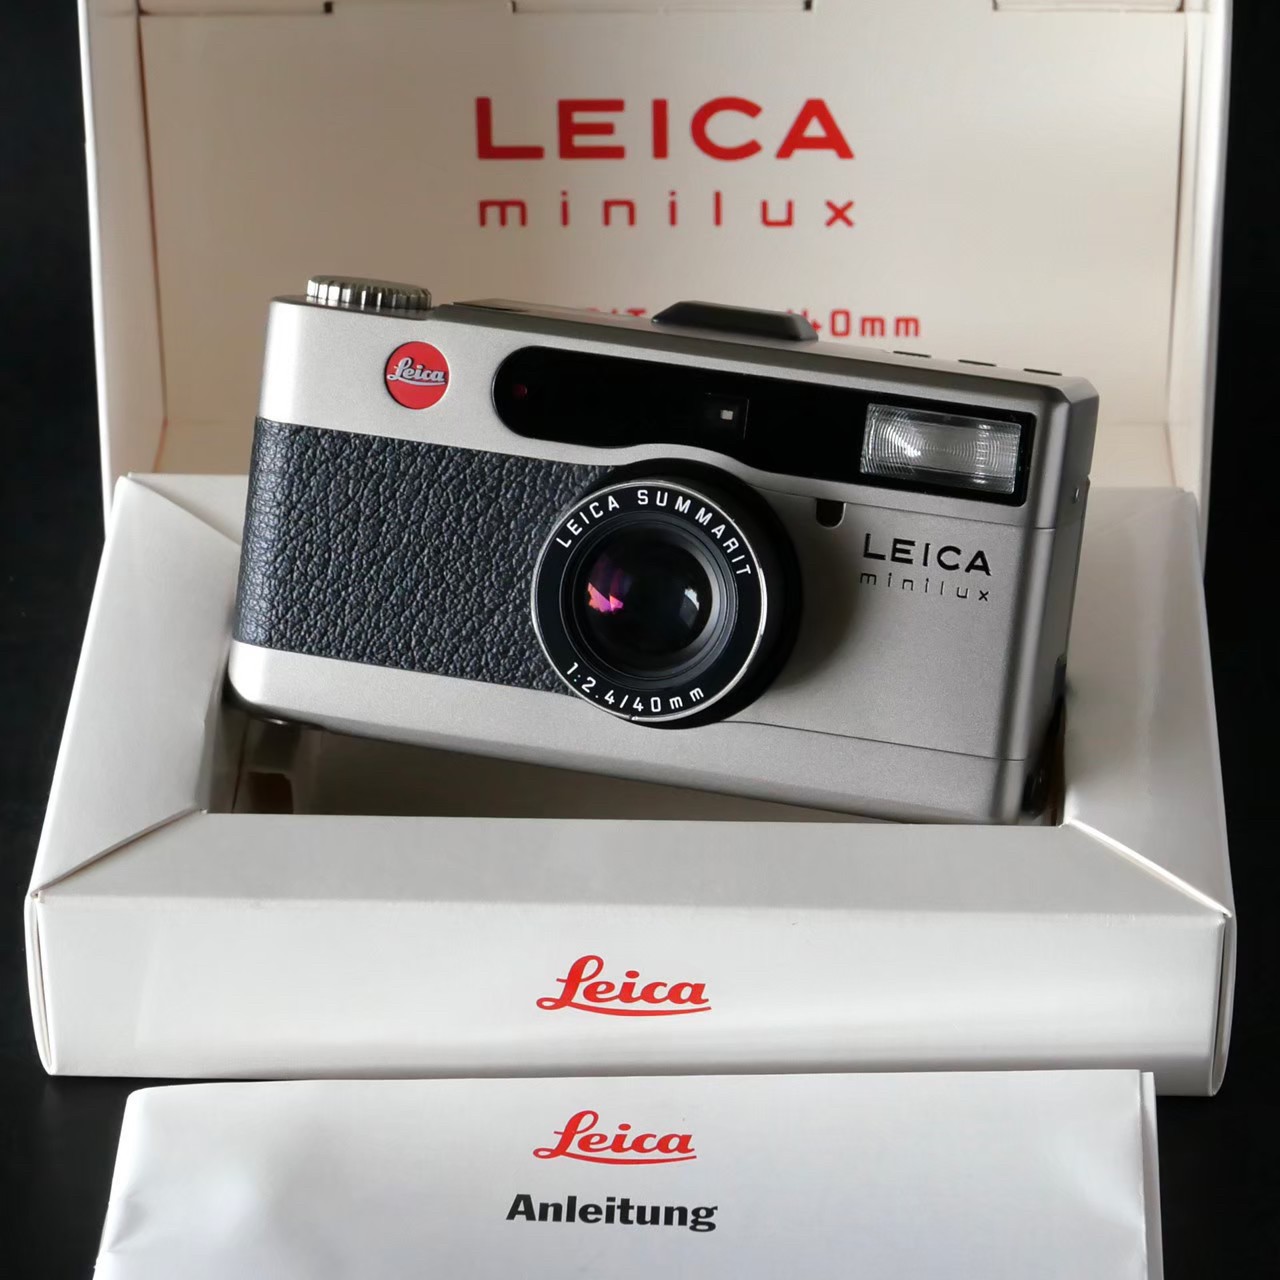 Leica Minilux Champagne - นายตัวน้อย